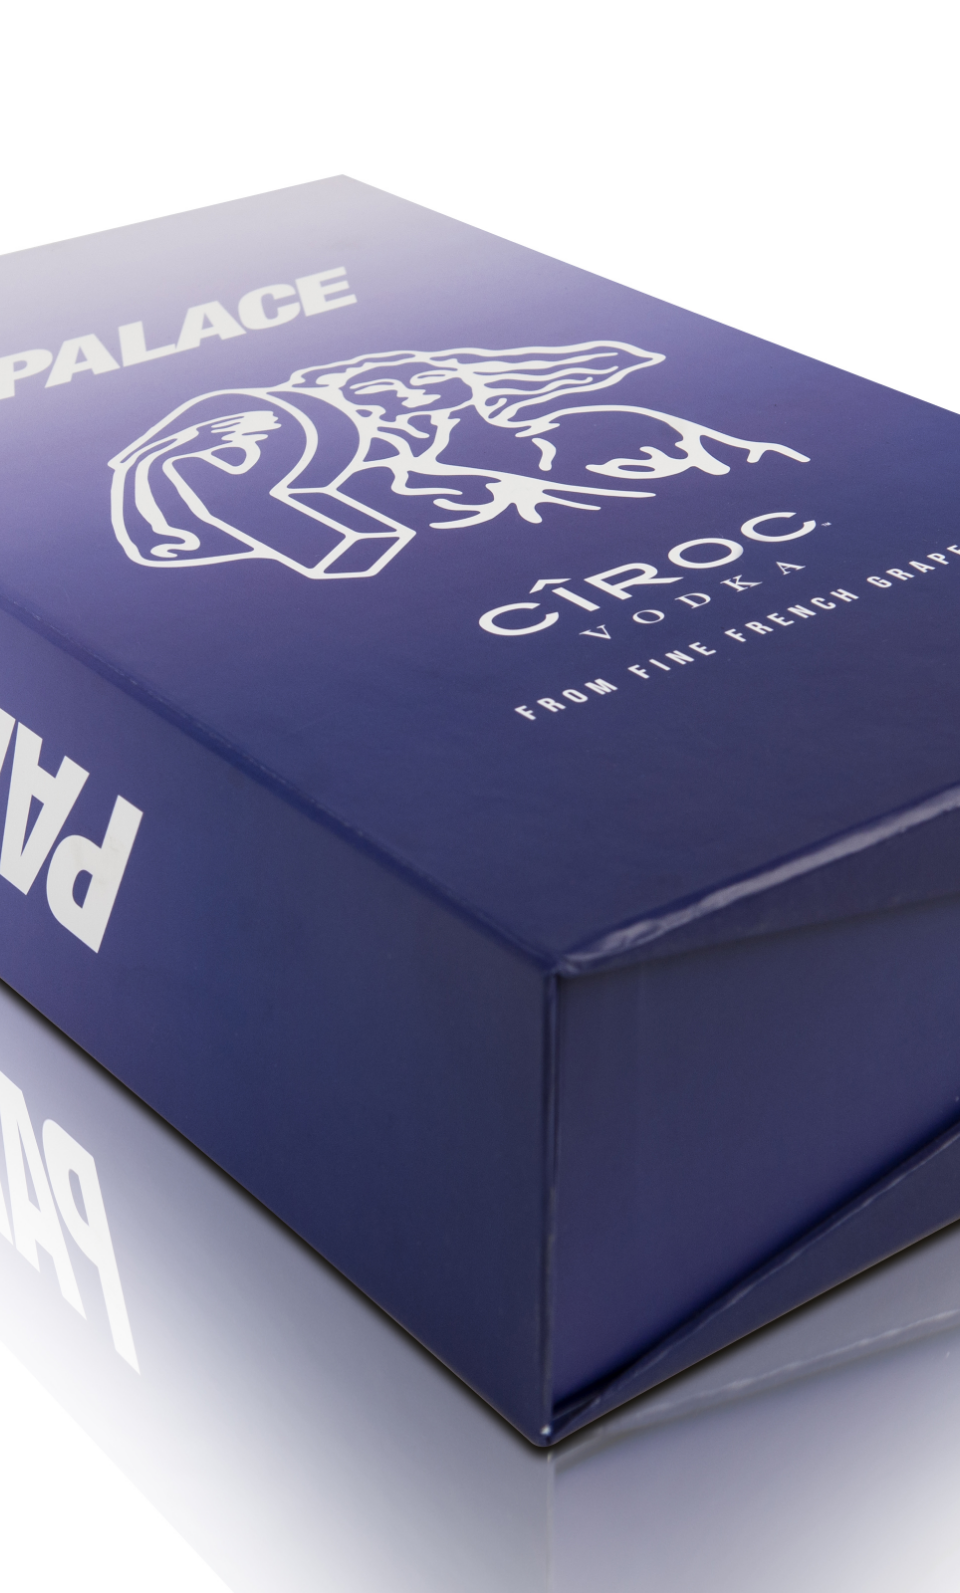 Ciroc packaging